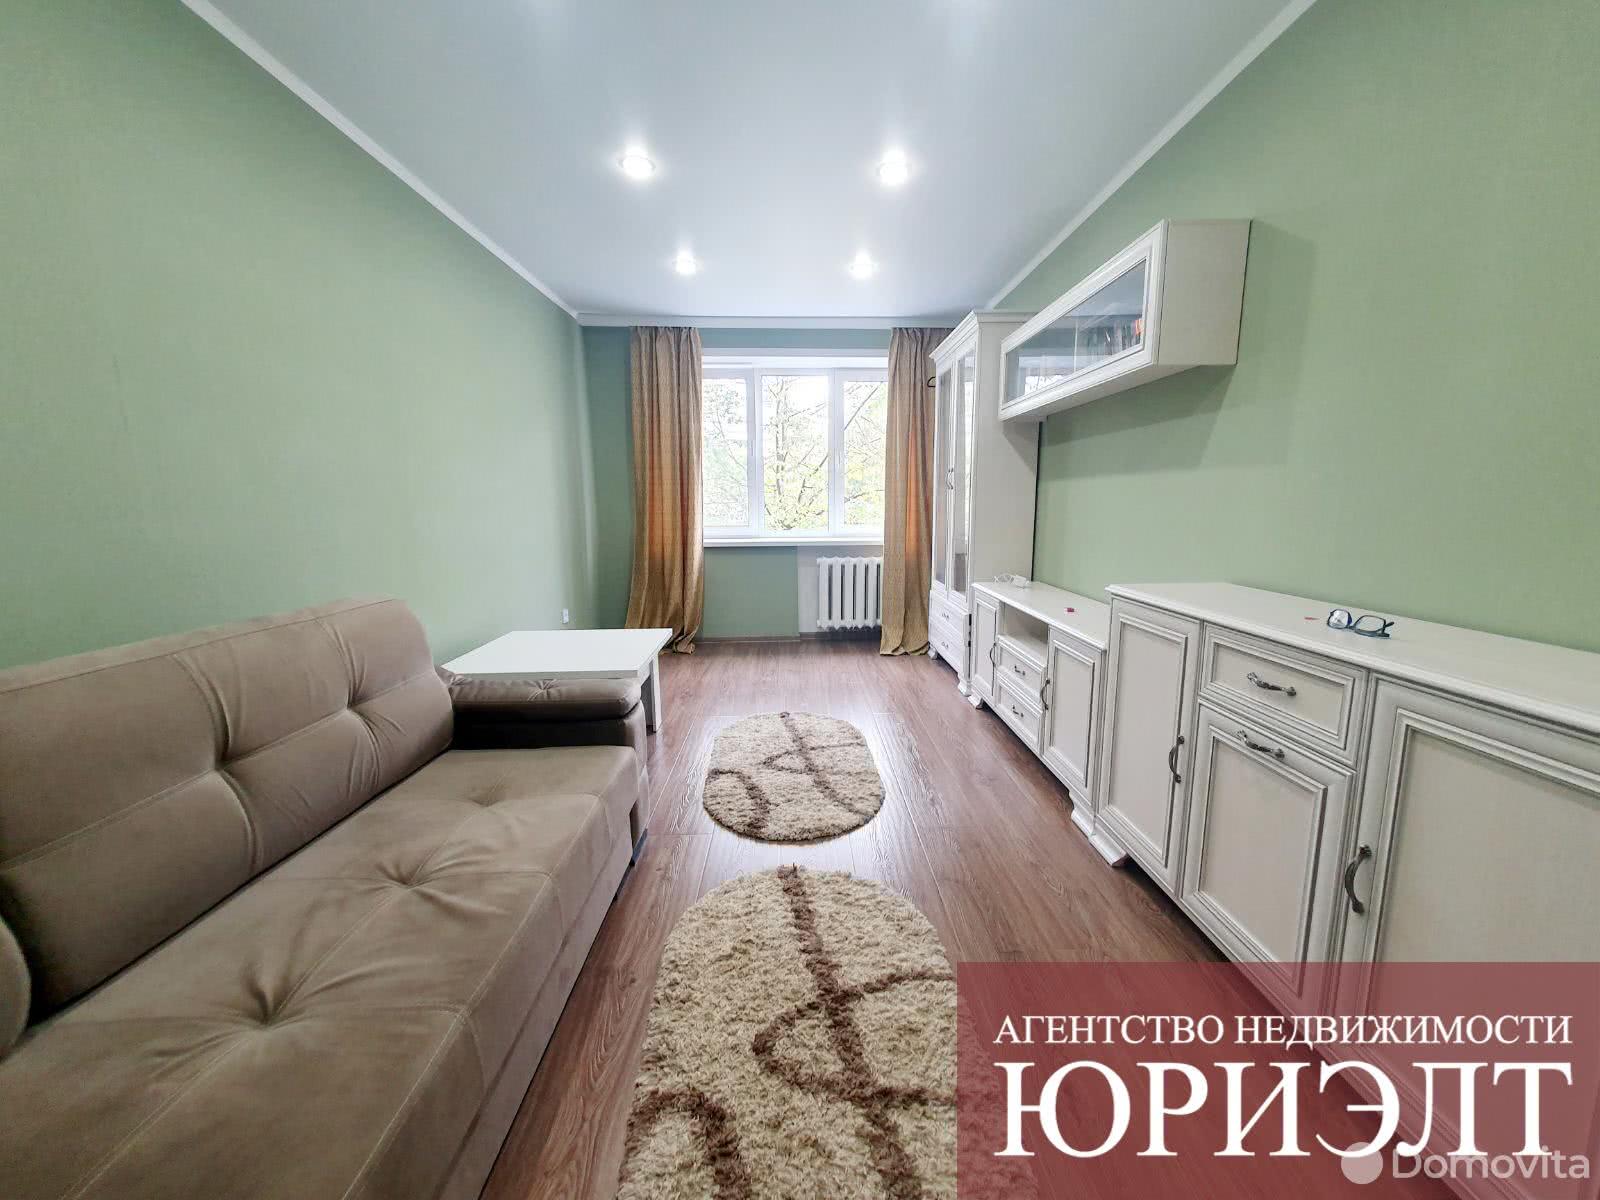 квартира, Брест, ул. Карбышева, д. 100, стоимость продажи 190 888 р.